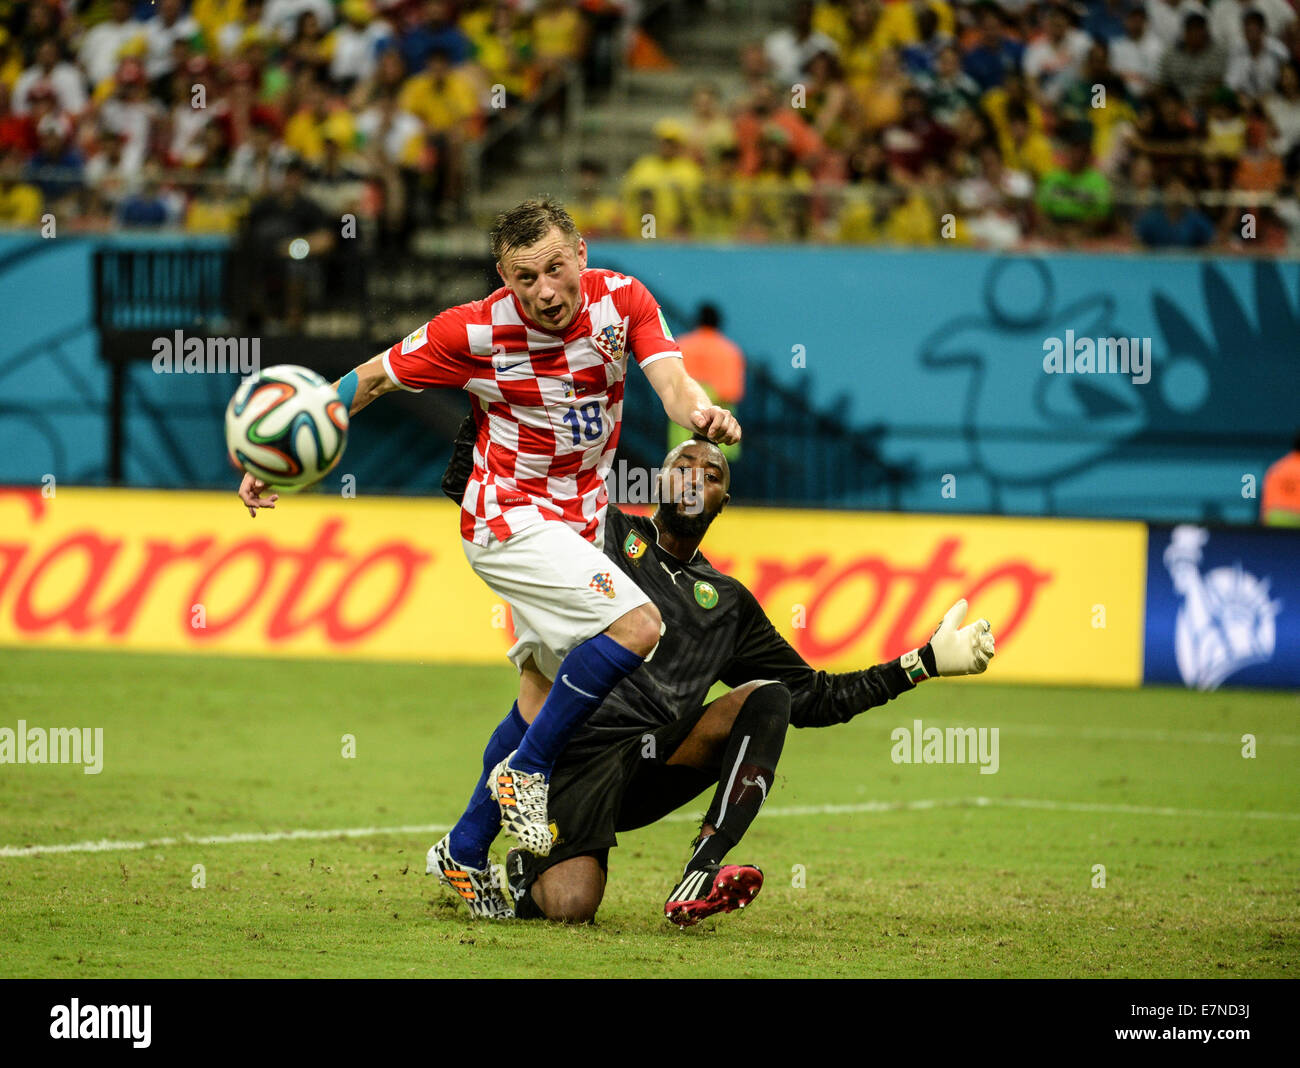 Ivica Olic. Croatia v Cameroon. Group match. FIFA World Cup 2014 Brazil. Arena Amazonia, Manaus. 18 Jun 2014. Stock Photo